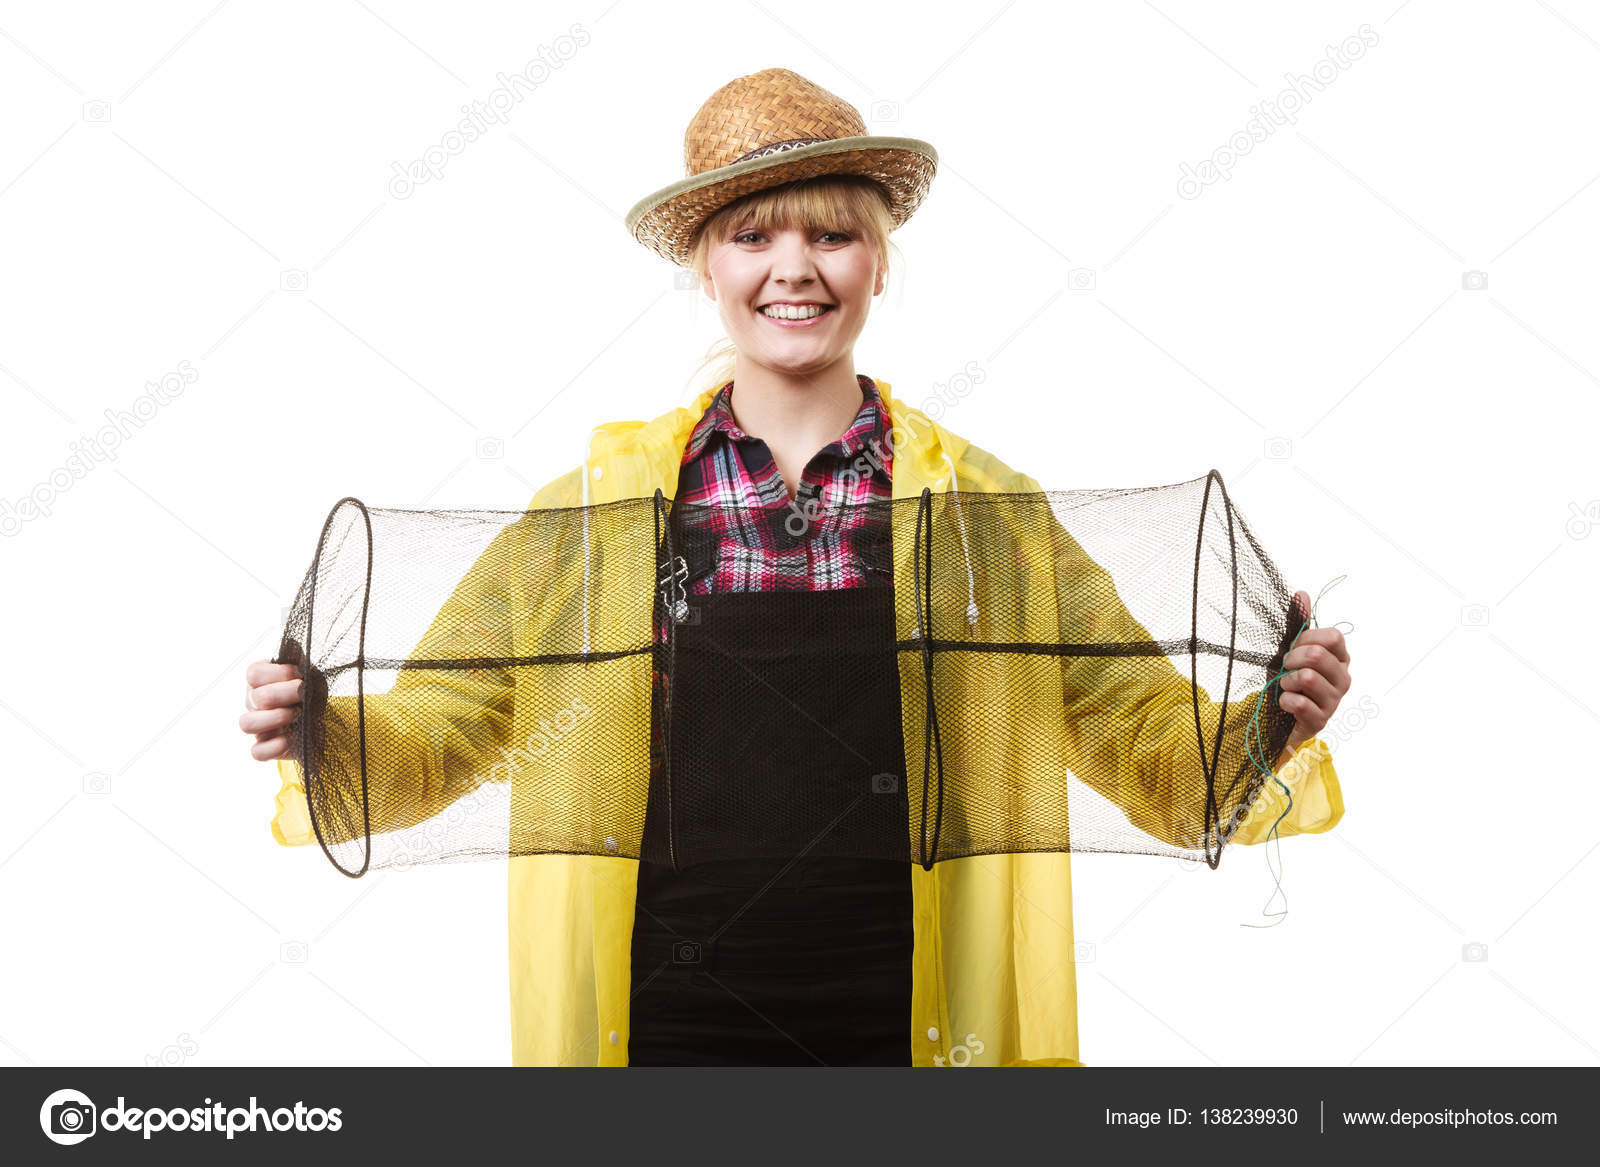 https://st3.depositphotos.com/1735158/13823/i/1600/depositphotos_138239930-stock-photo-happy-woman-holding-empty-fishing.jpg